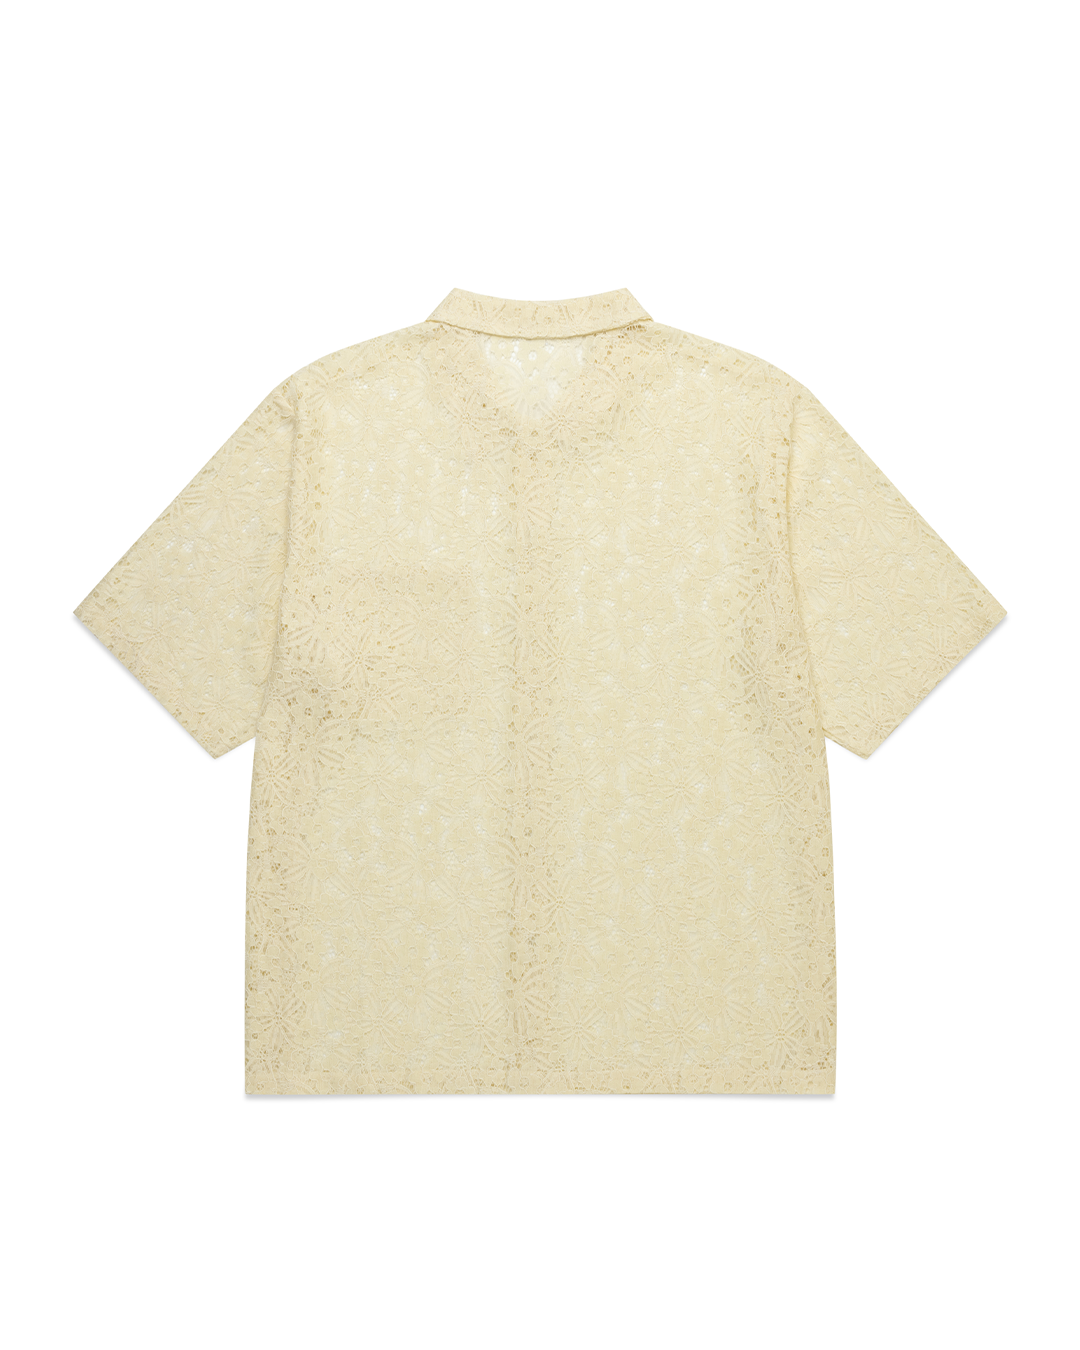 Cream Lace Shirt